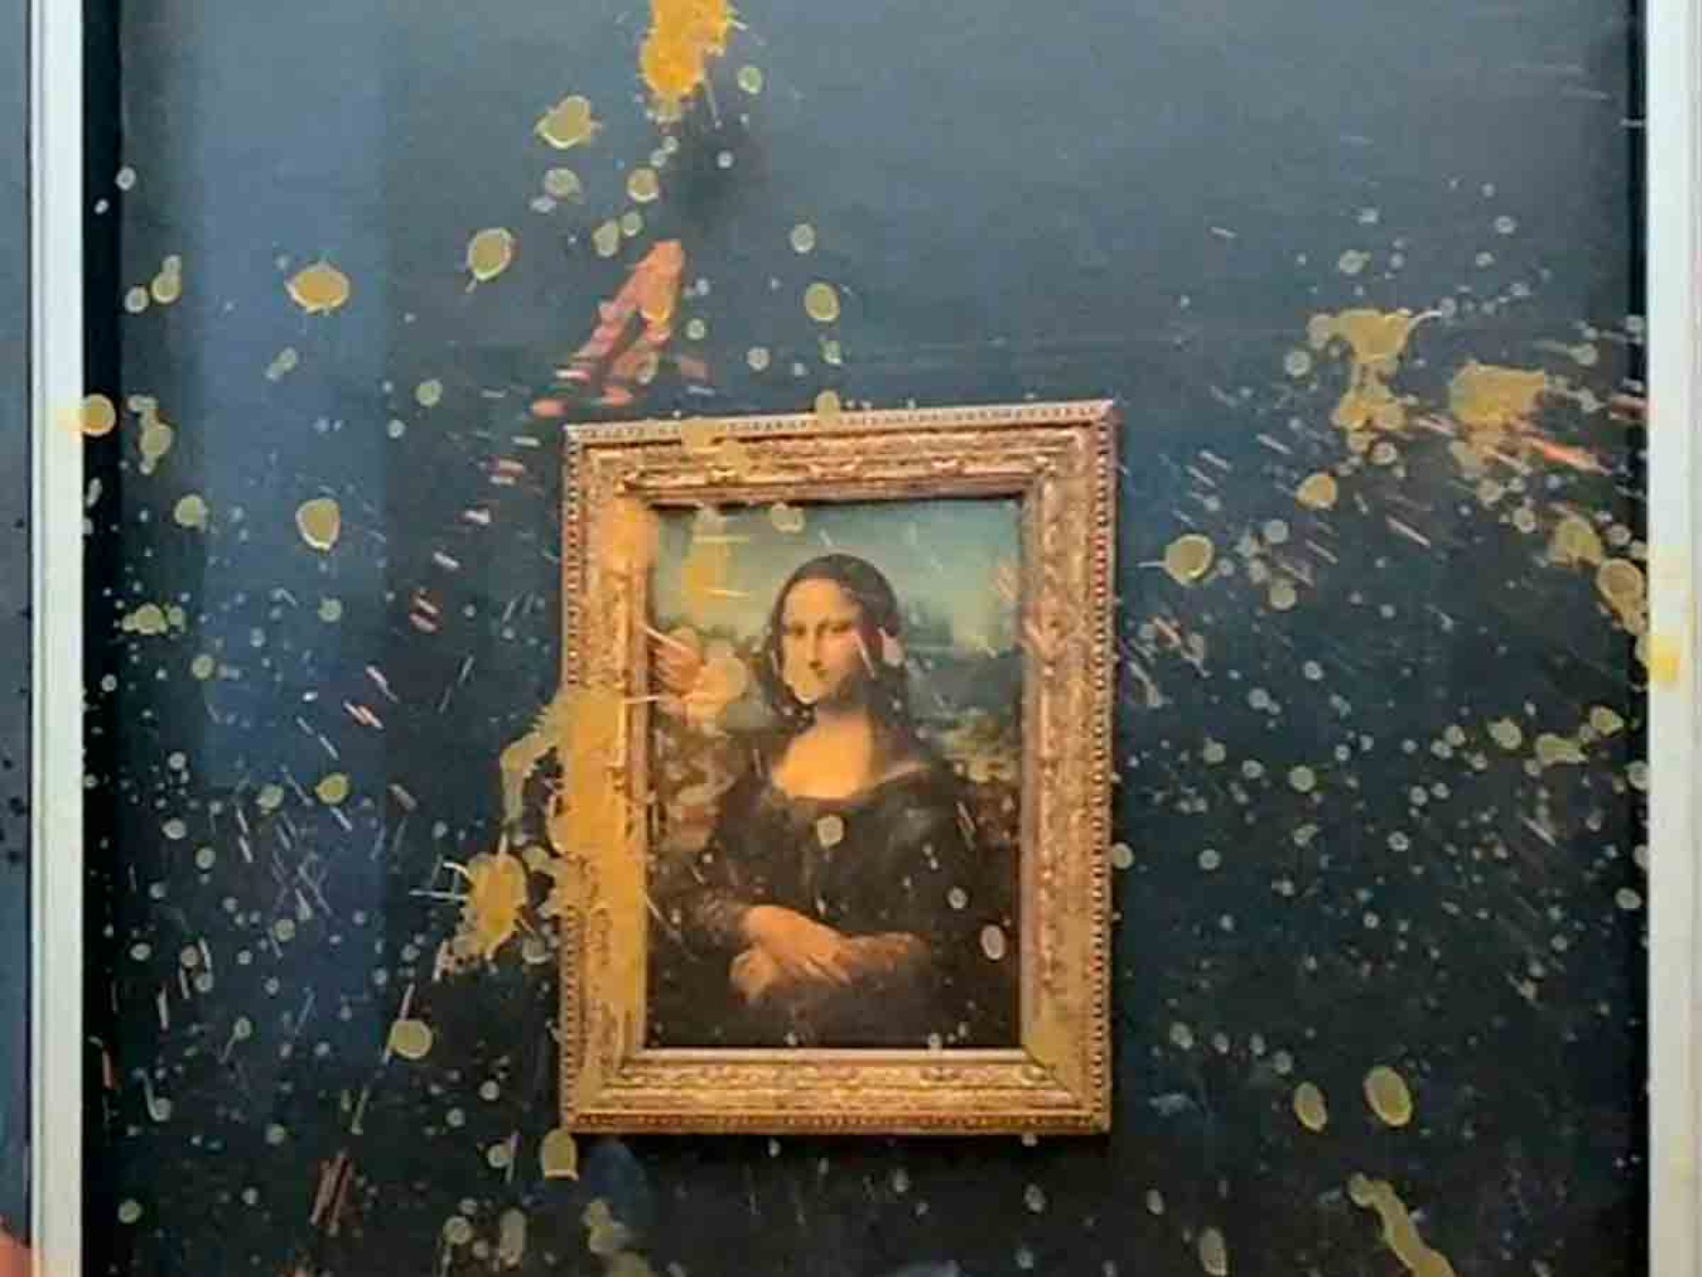 Manifestantes arrojan sopa al cuadro de Mona Lisa en el Louvre